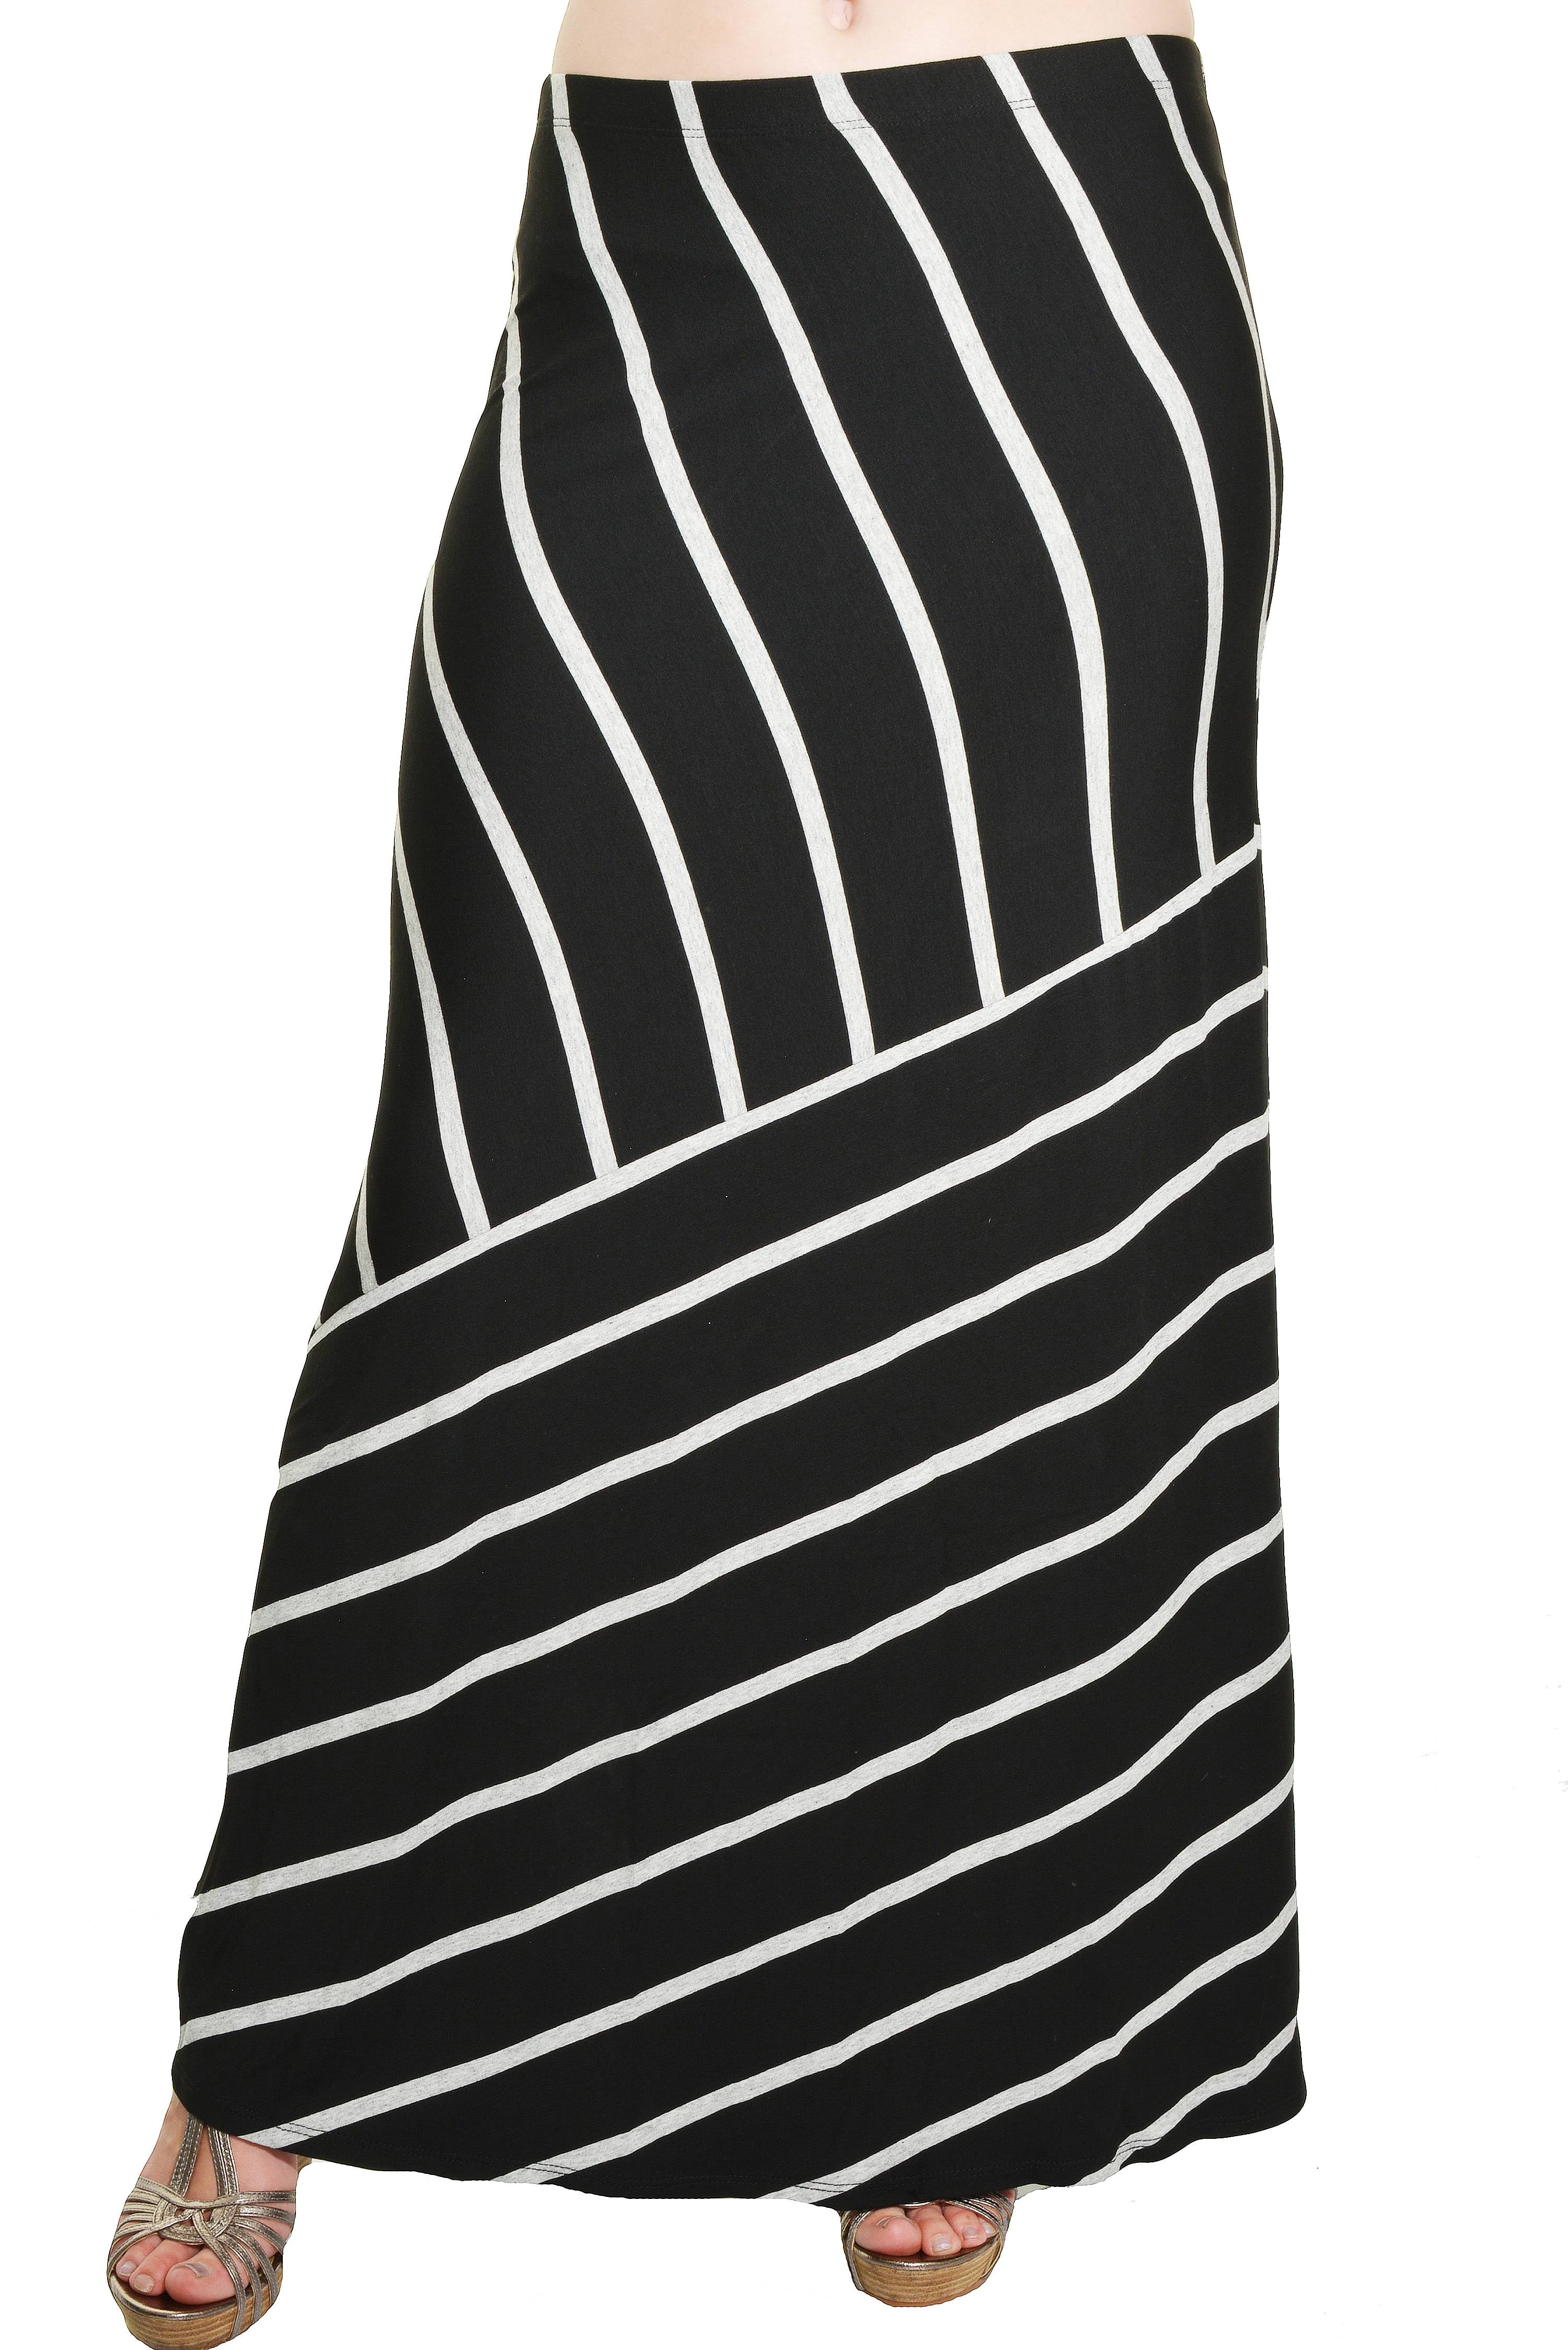 Women's Matty M Long Full Length Maxi Skirt Black White Palm Teal Pull On NWT 